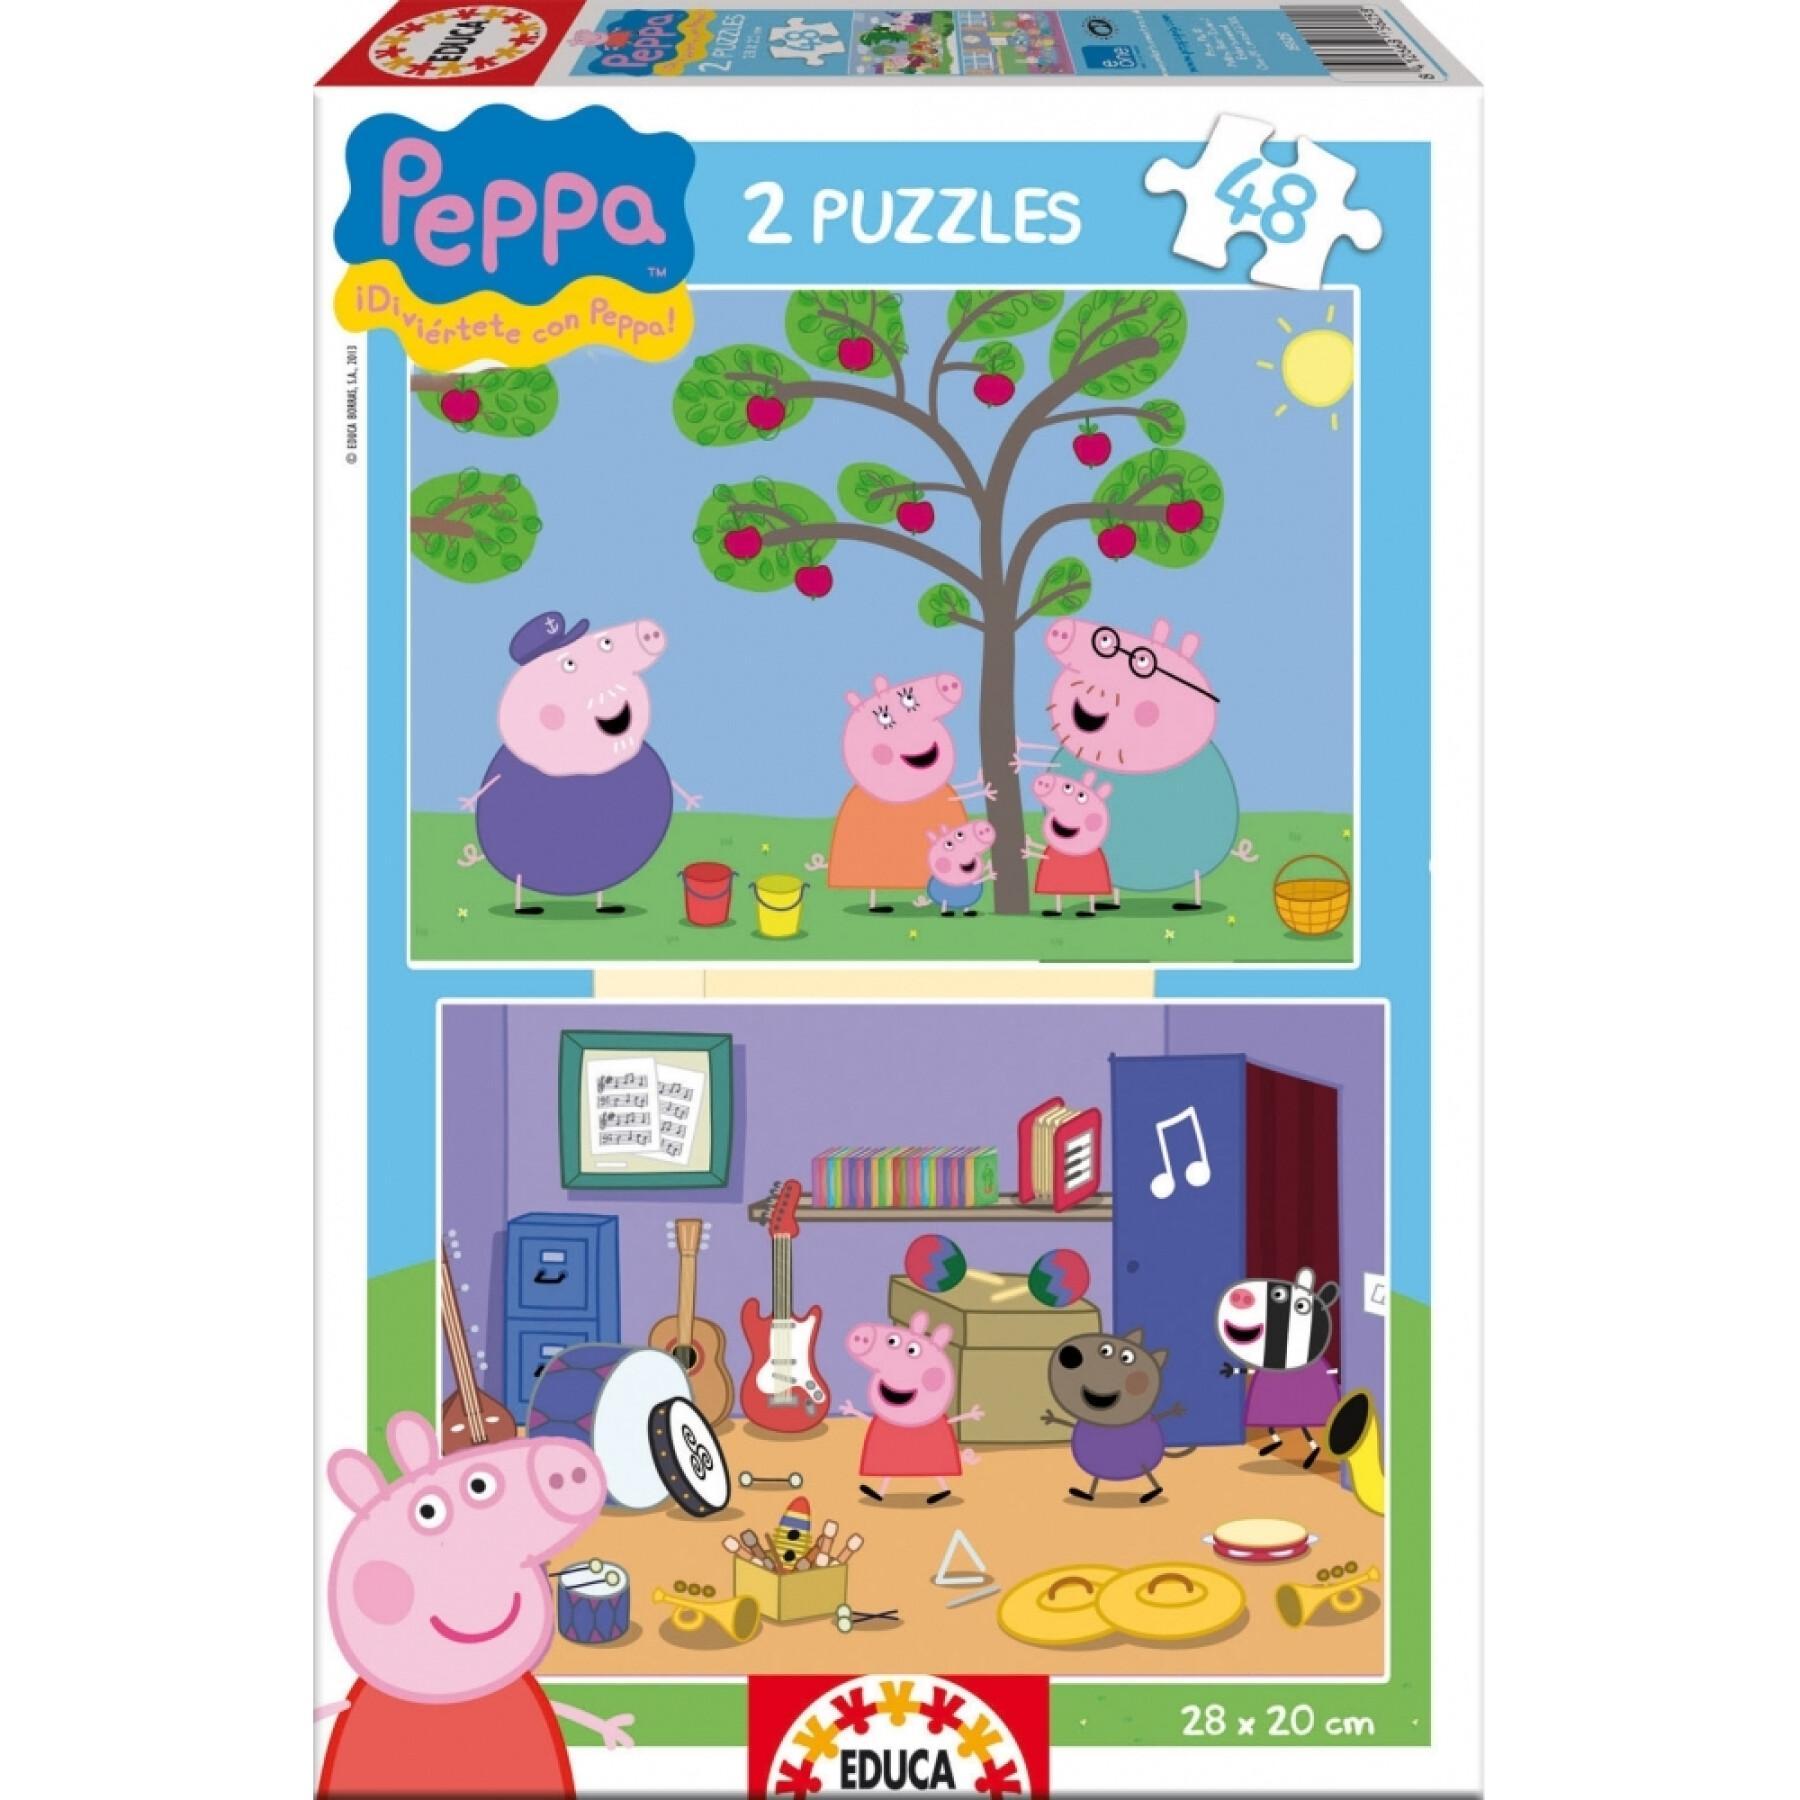 Puzzle de 2 peças x 48 peças Peppa Pig